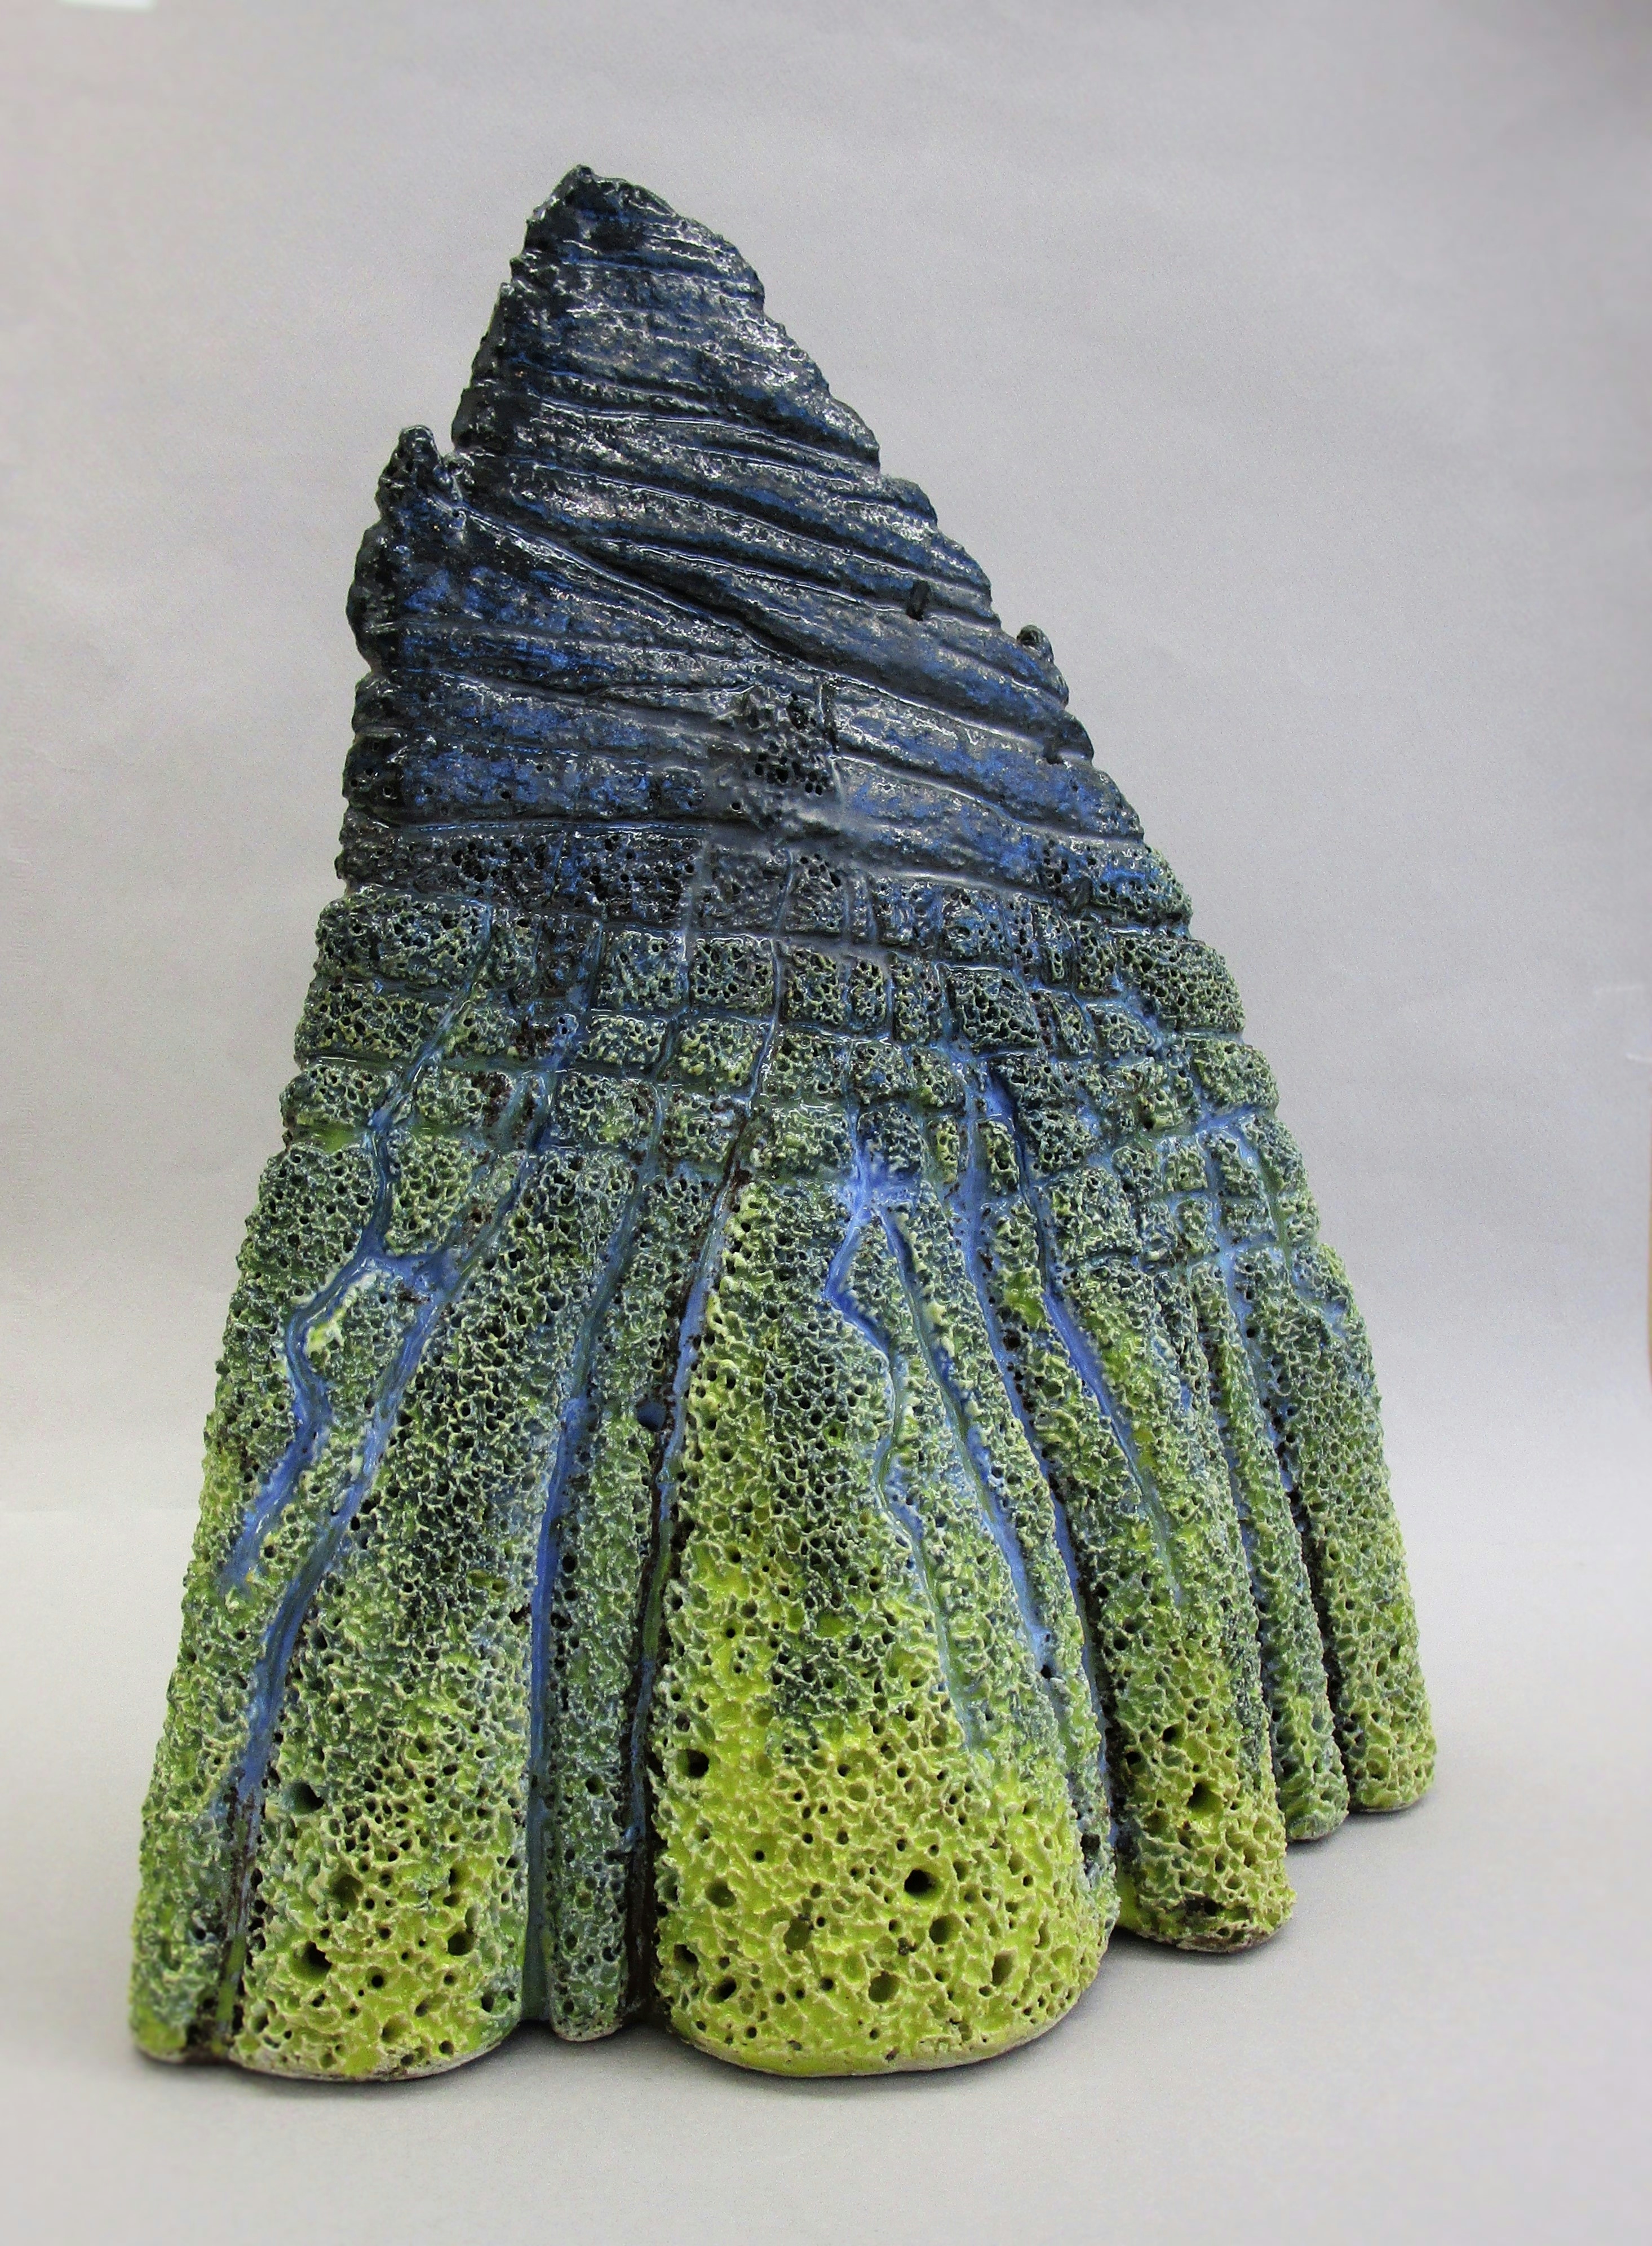 Mossy Mountain, keramik skúlptúr